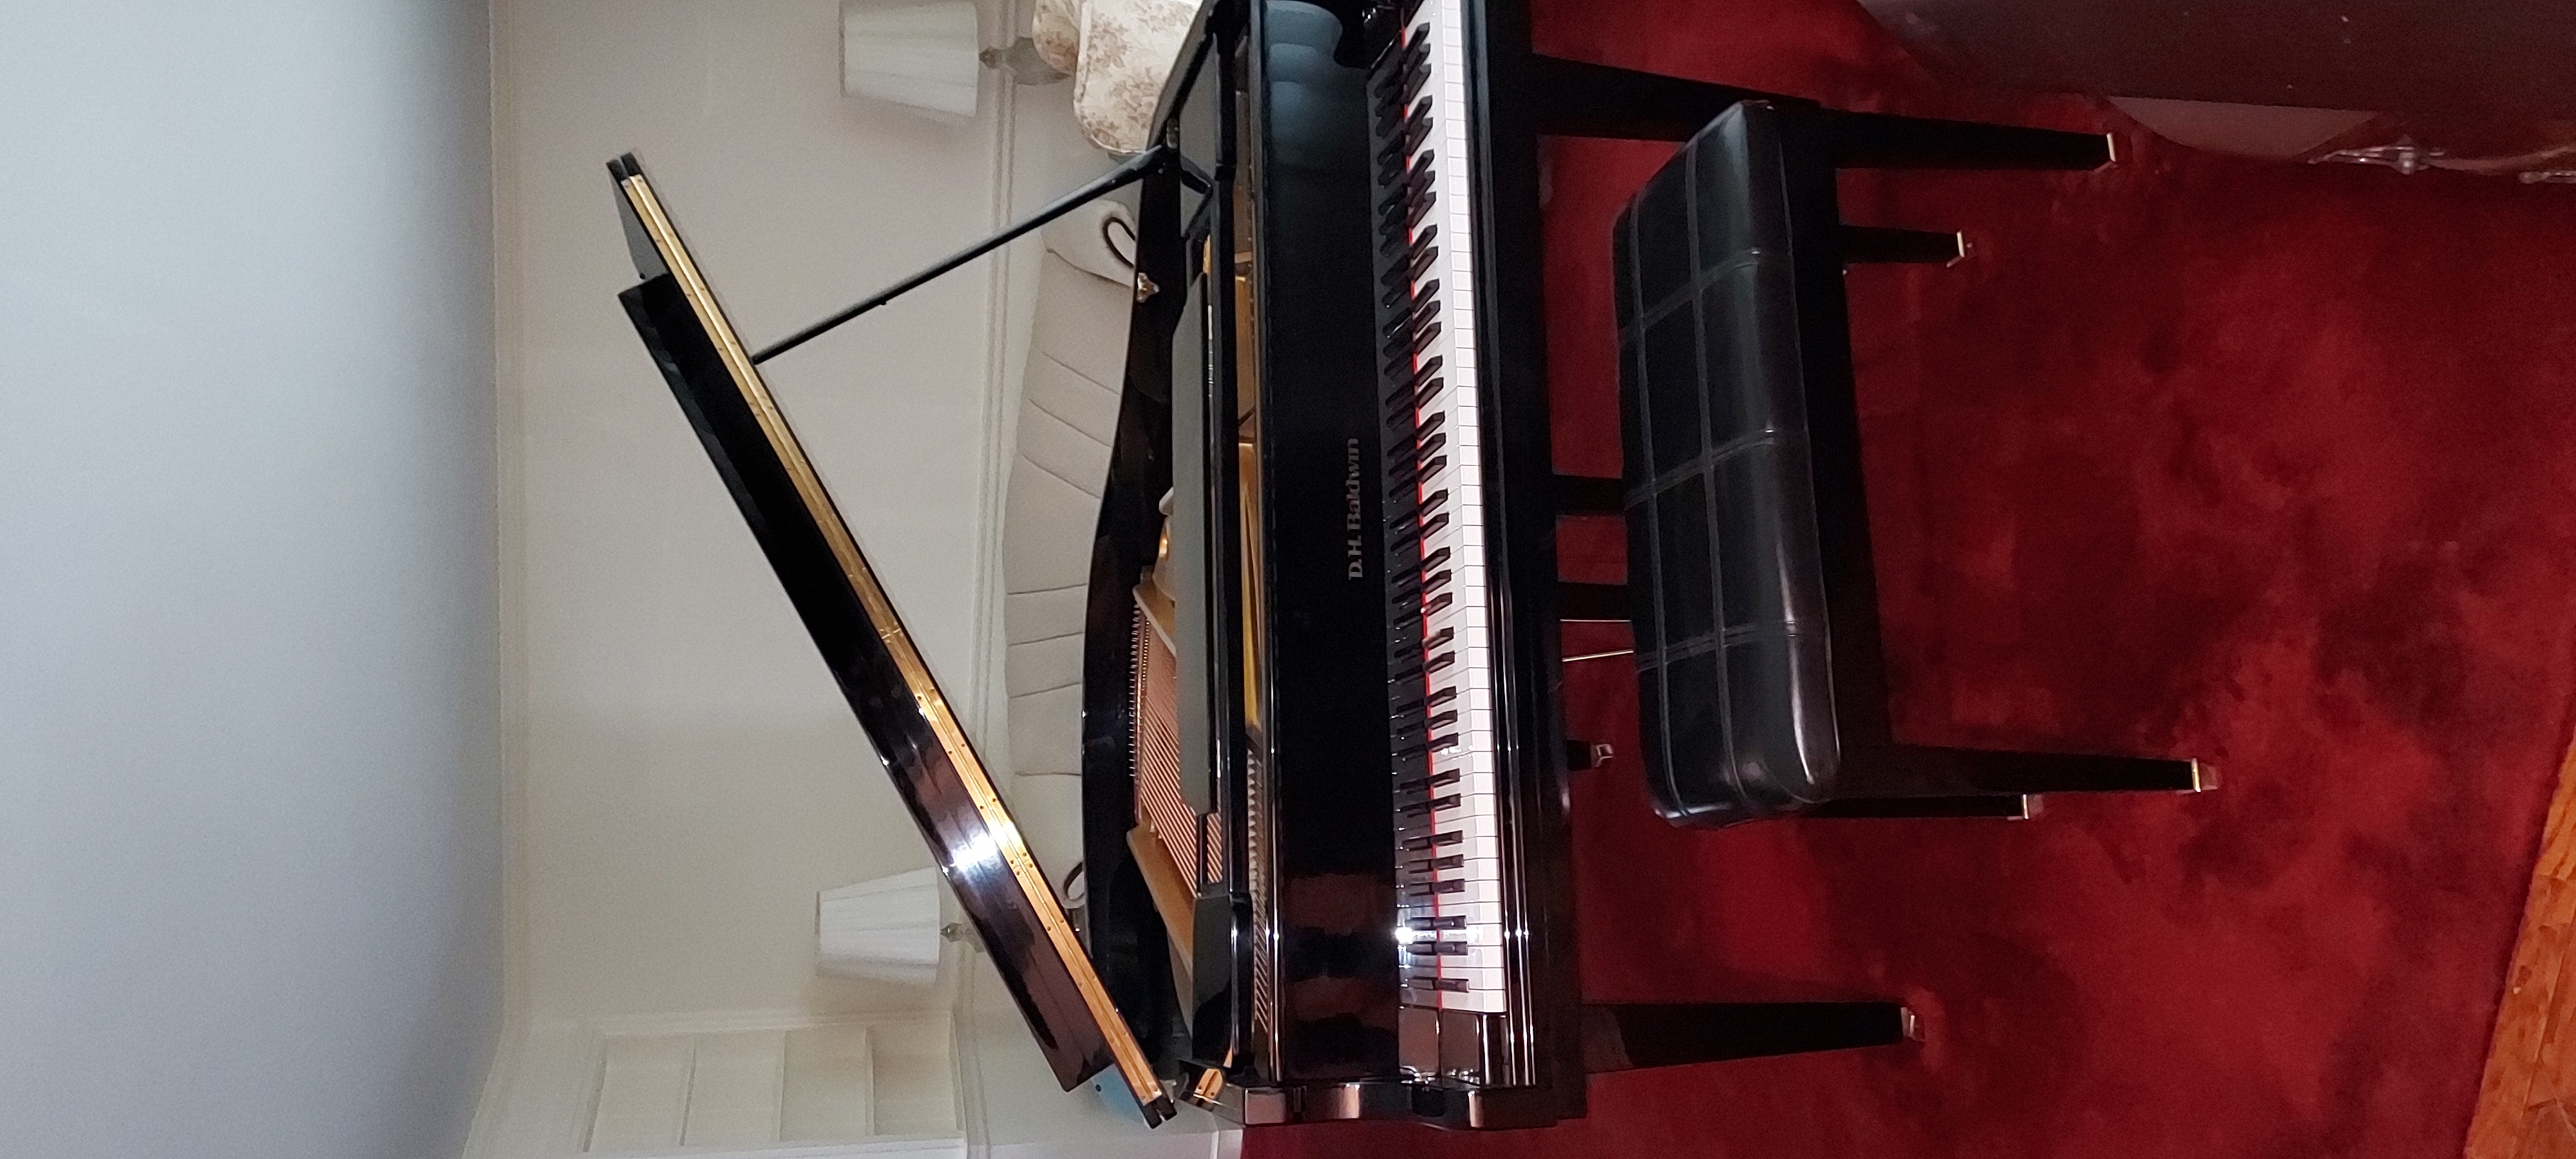 DH Baldwin baby grand piano for sale